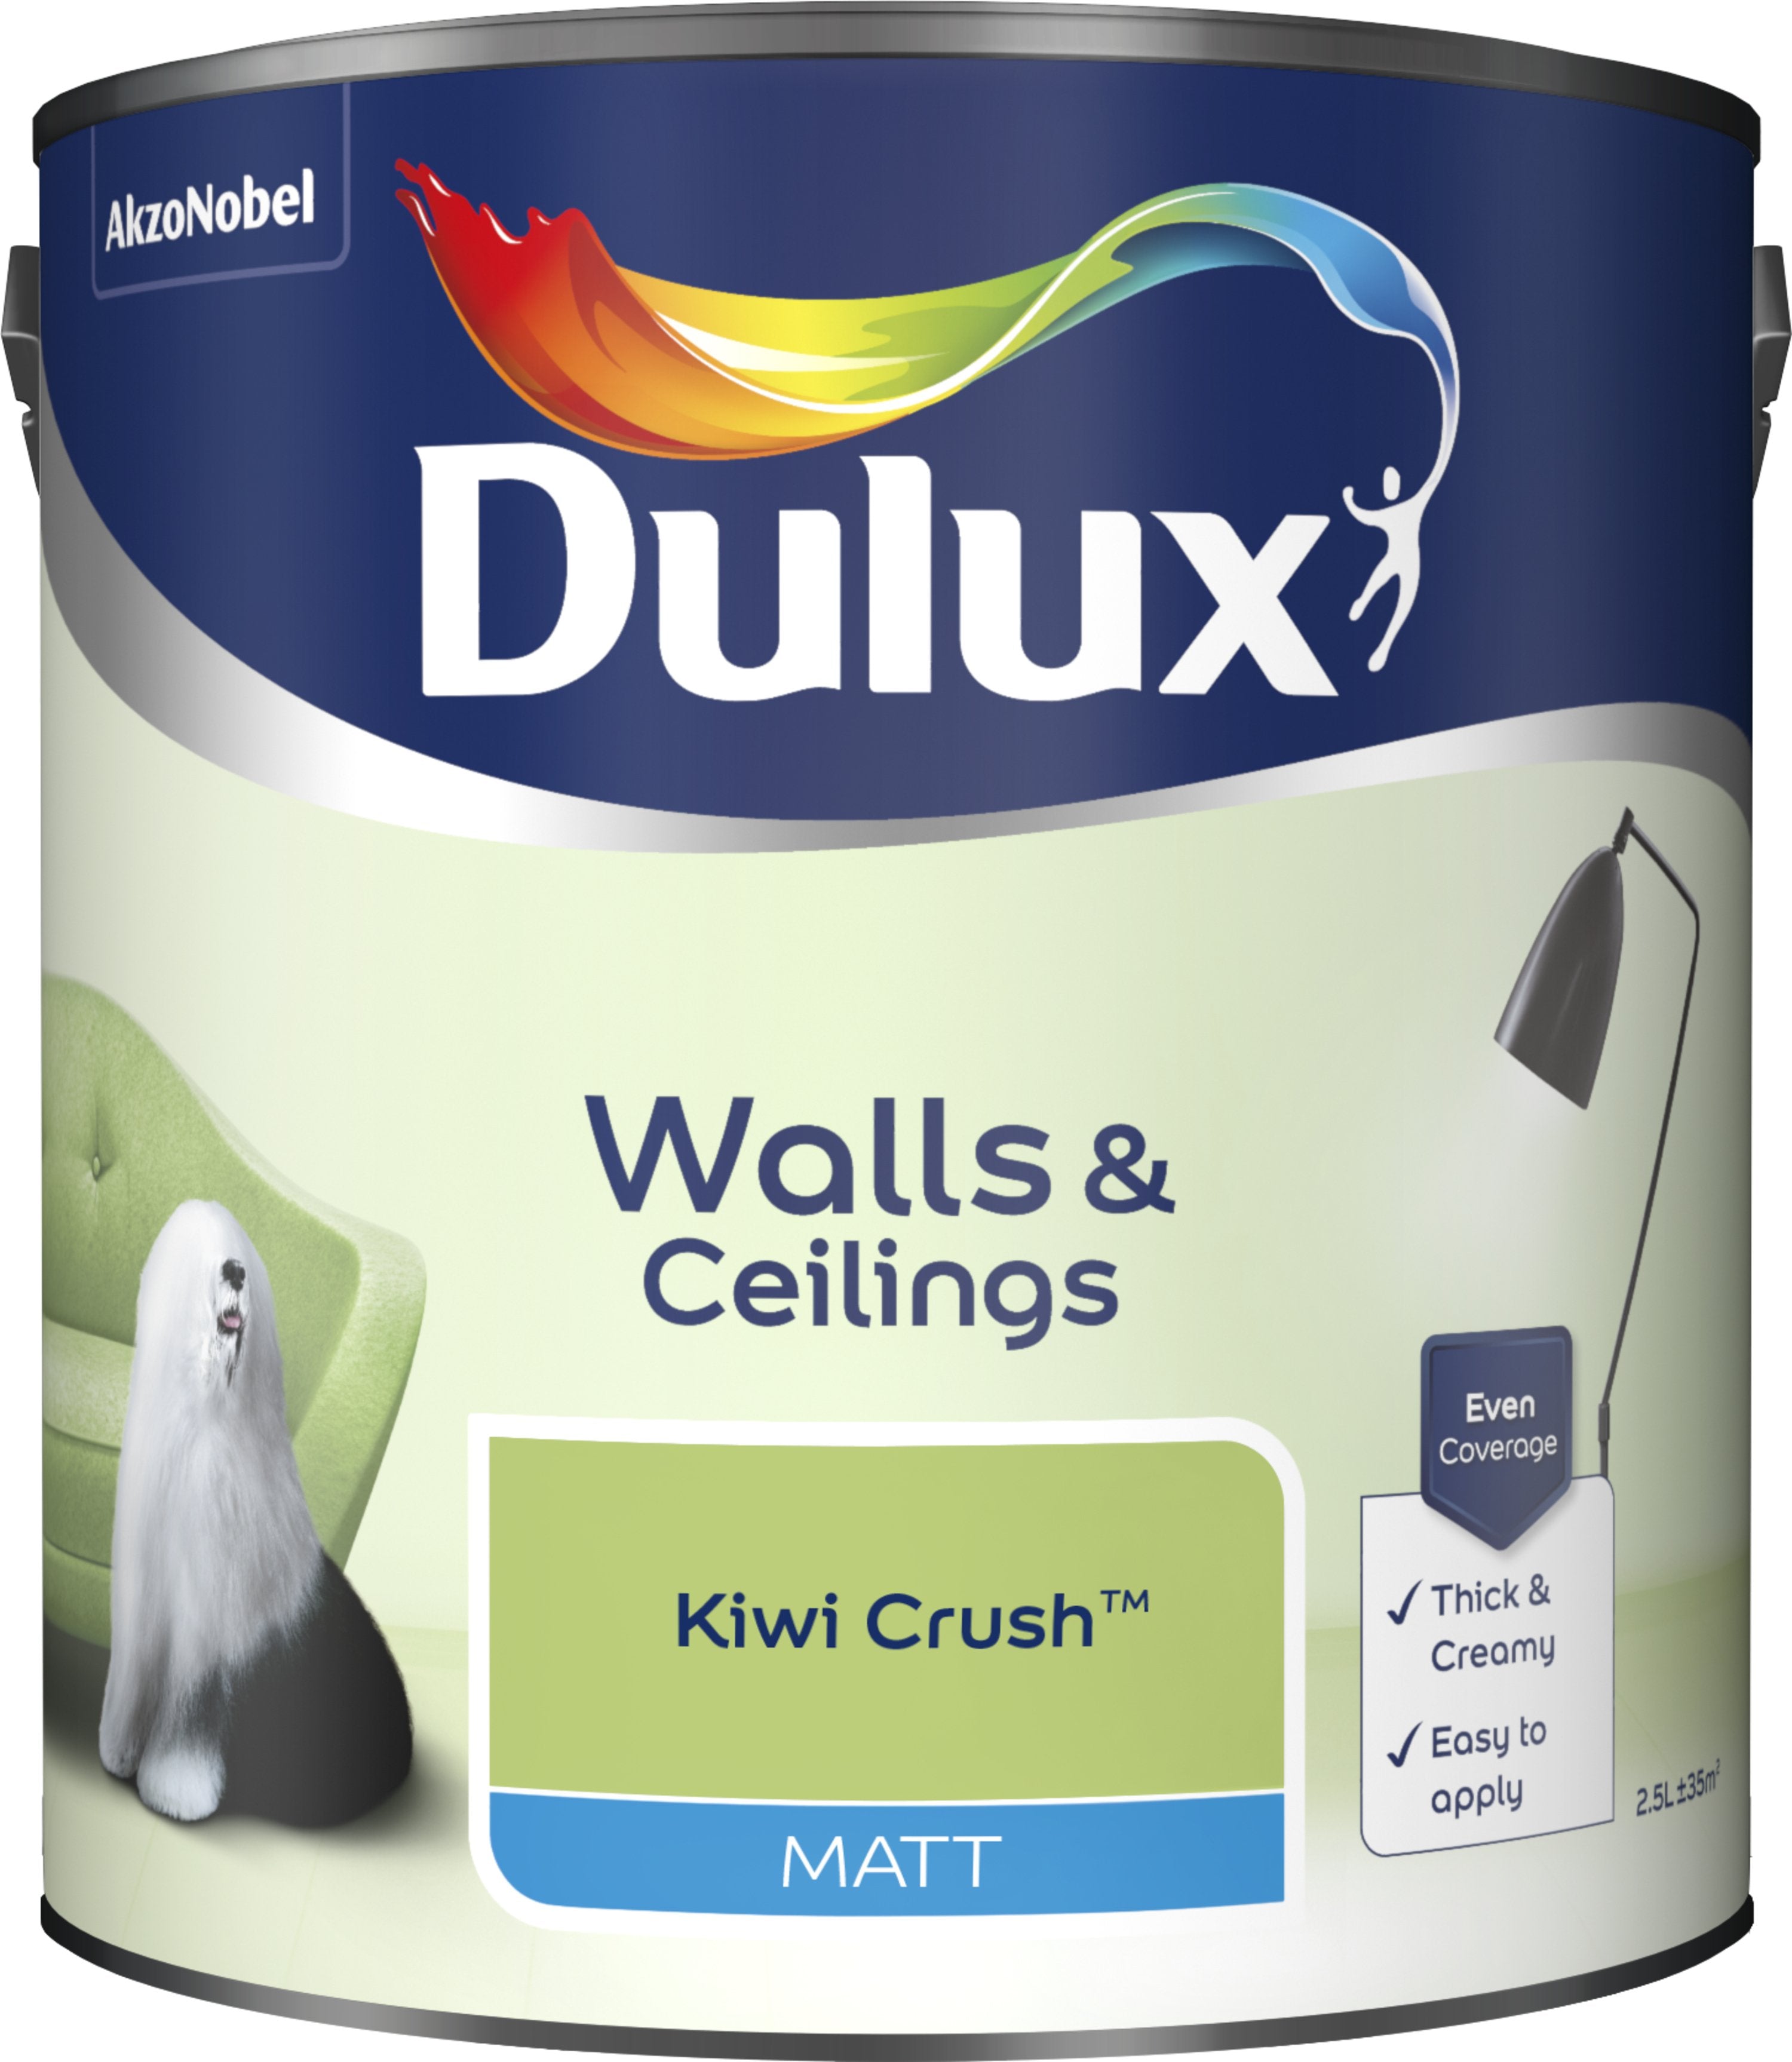 Dulux Matt Emulsion Paint For Walls And Ceilings - Kiwi Crush 2.5L Garden & Diy  Home Improvements  